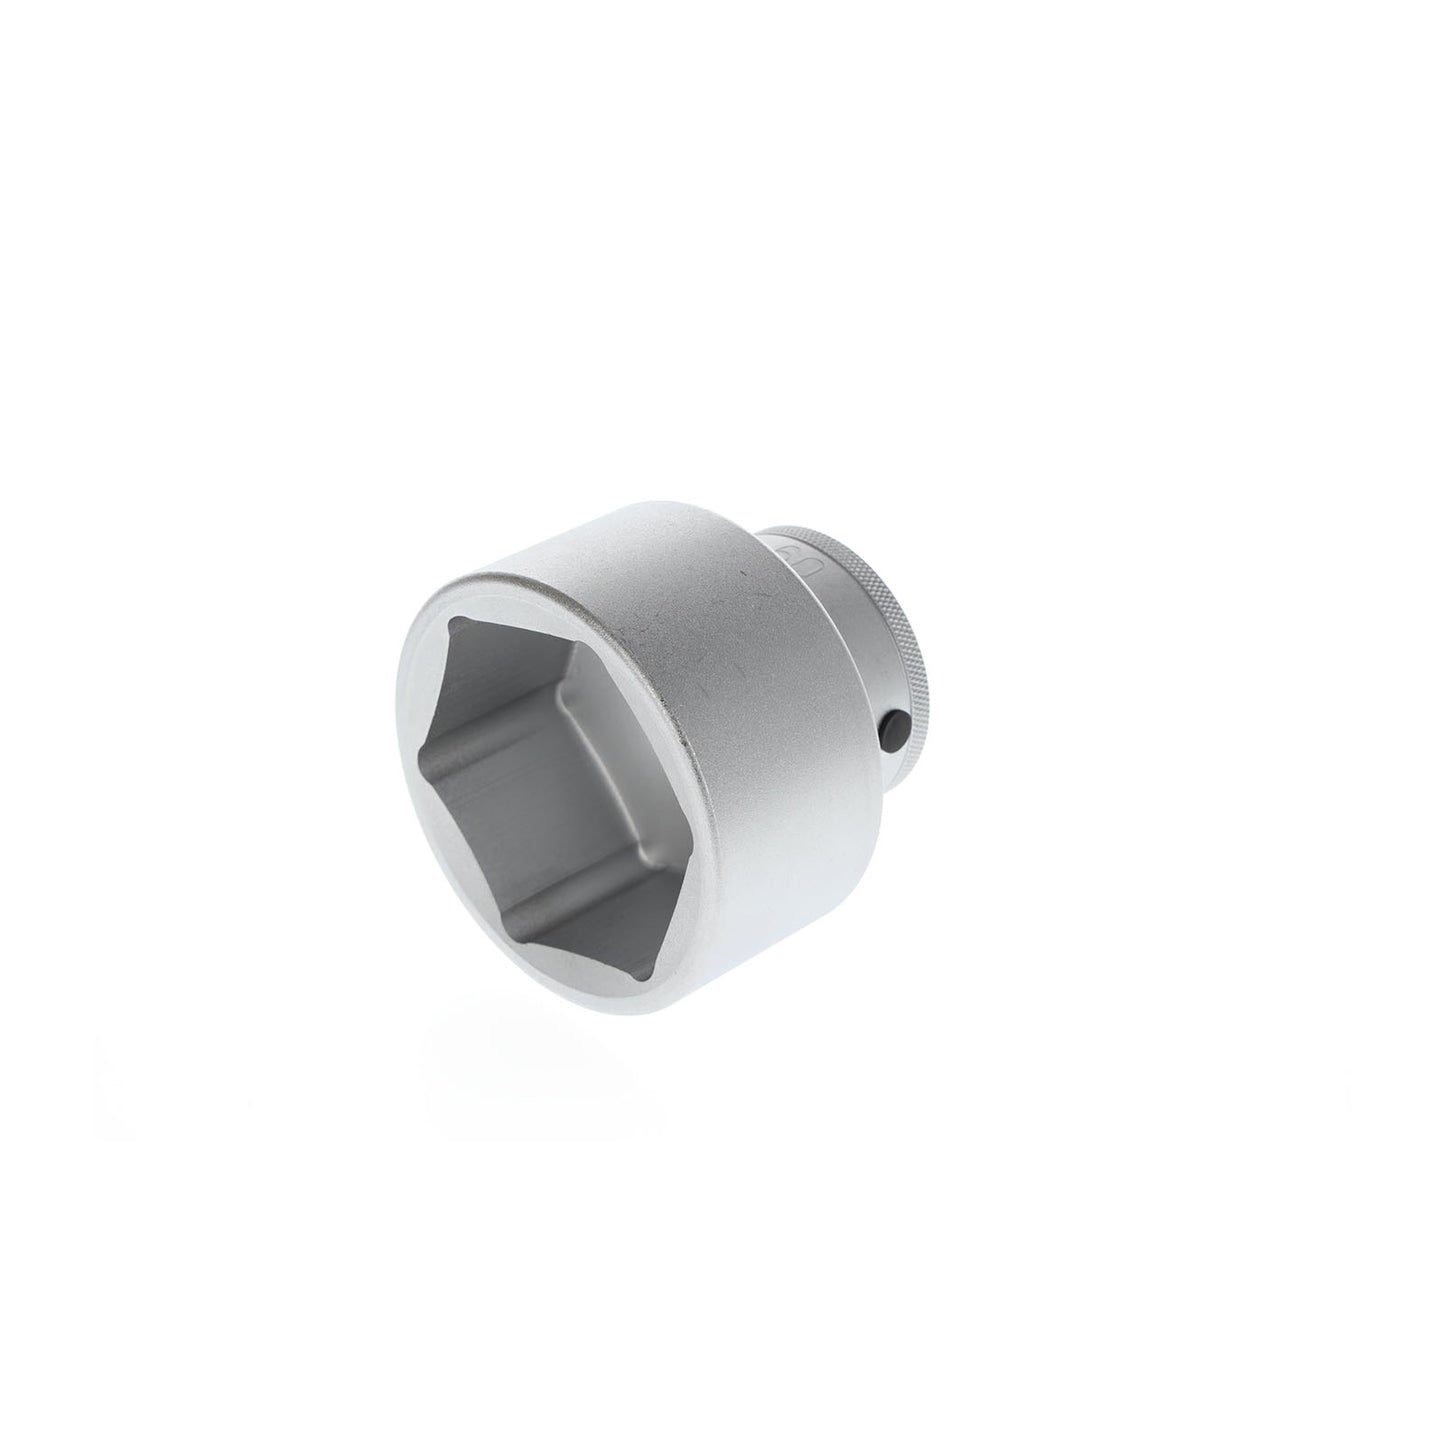 GEDORE 32 60 - Hexagonal Socket 3/4", 60 mm (6271510)